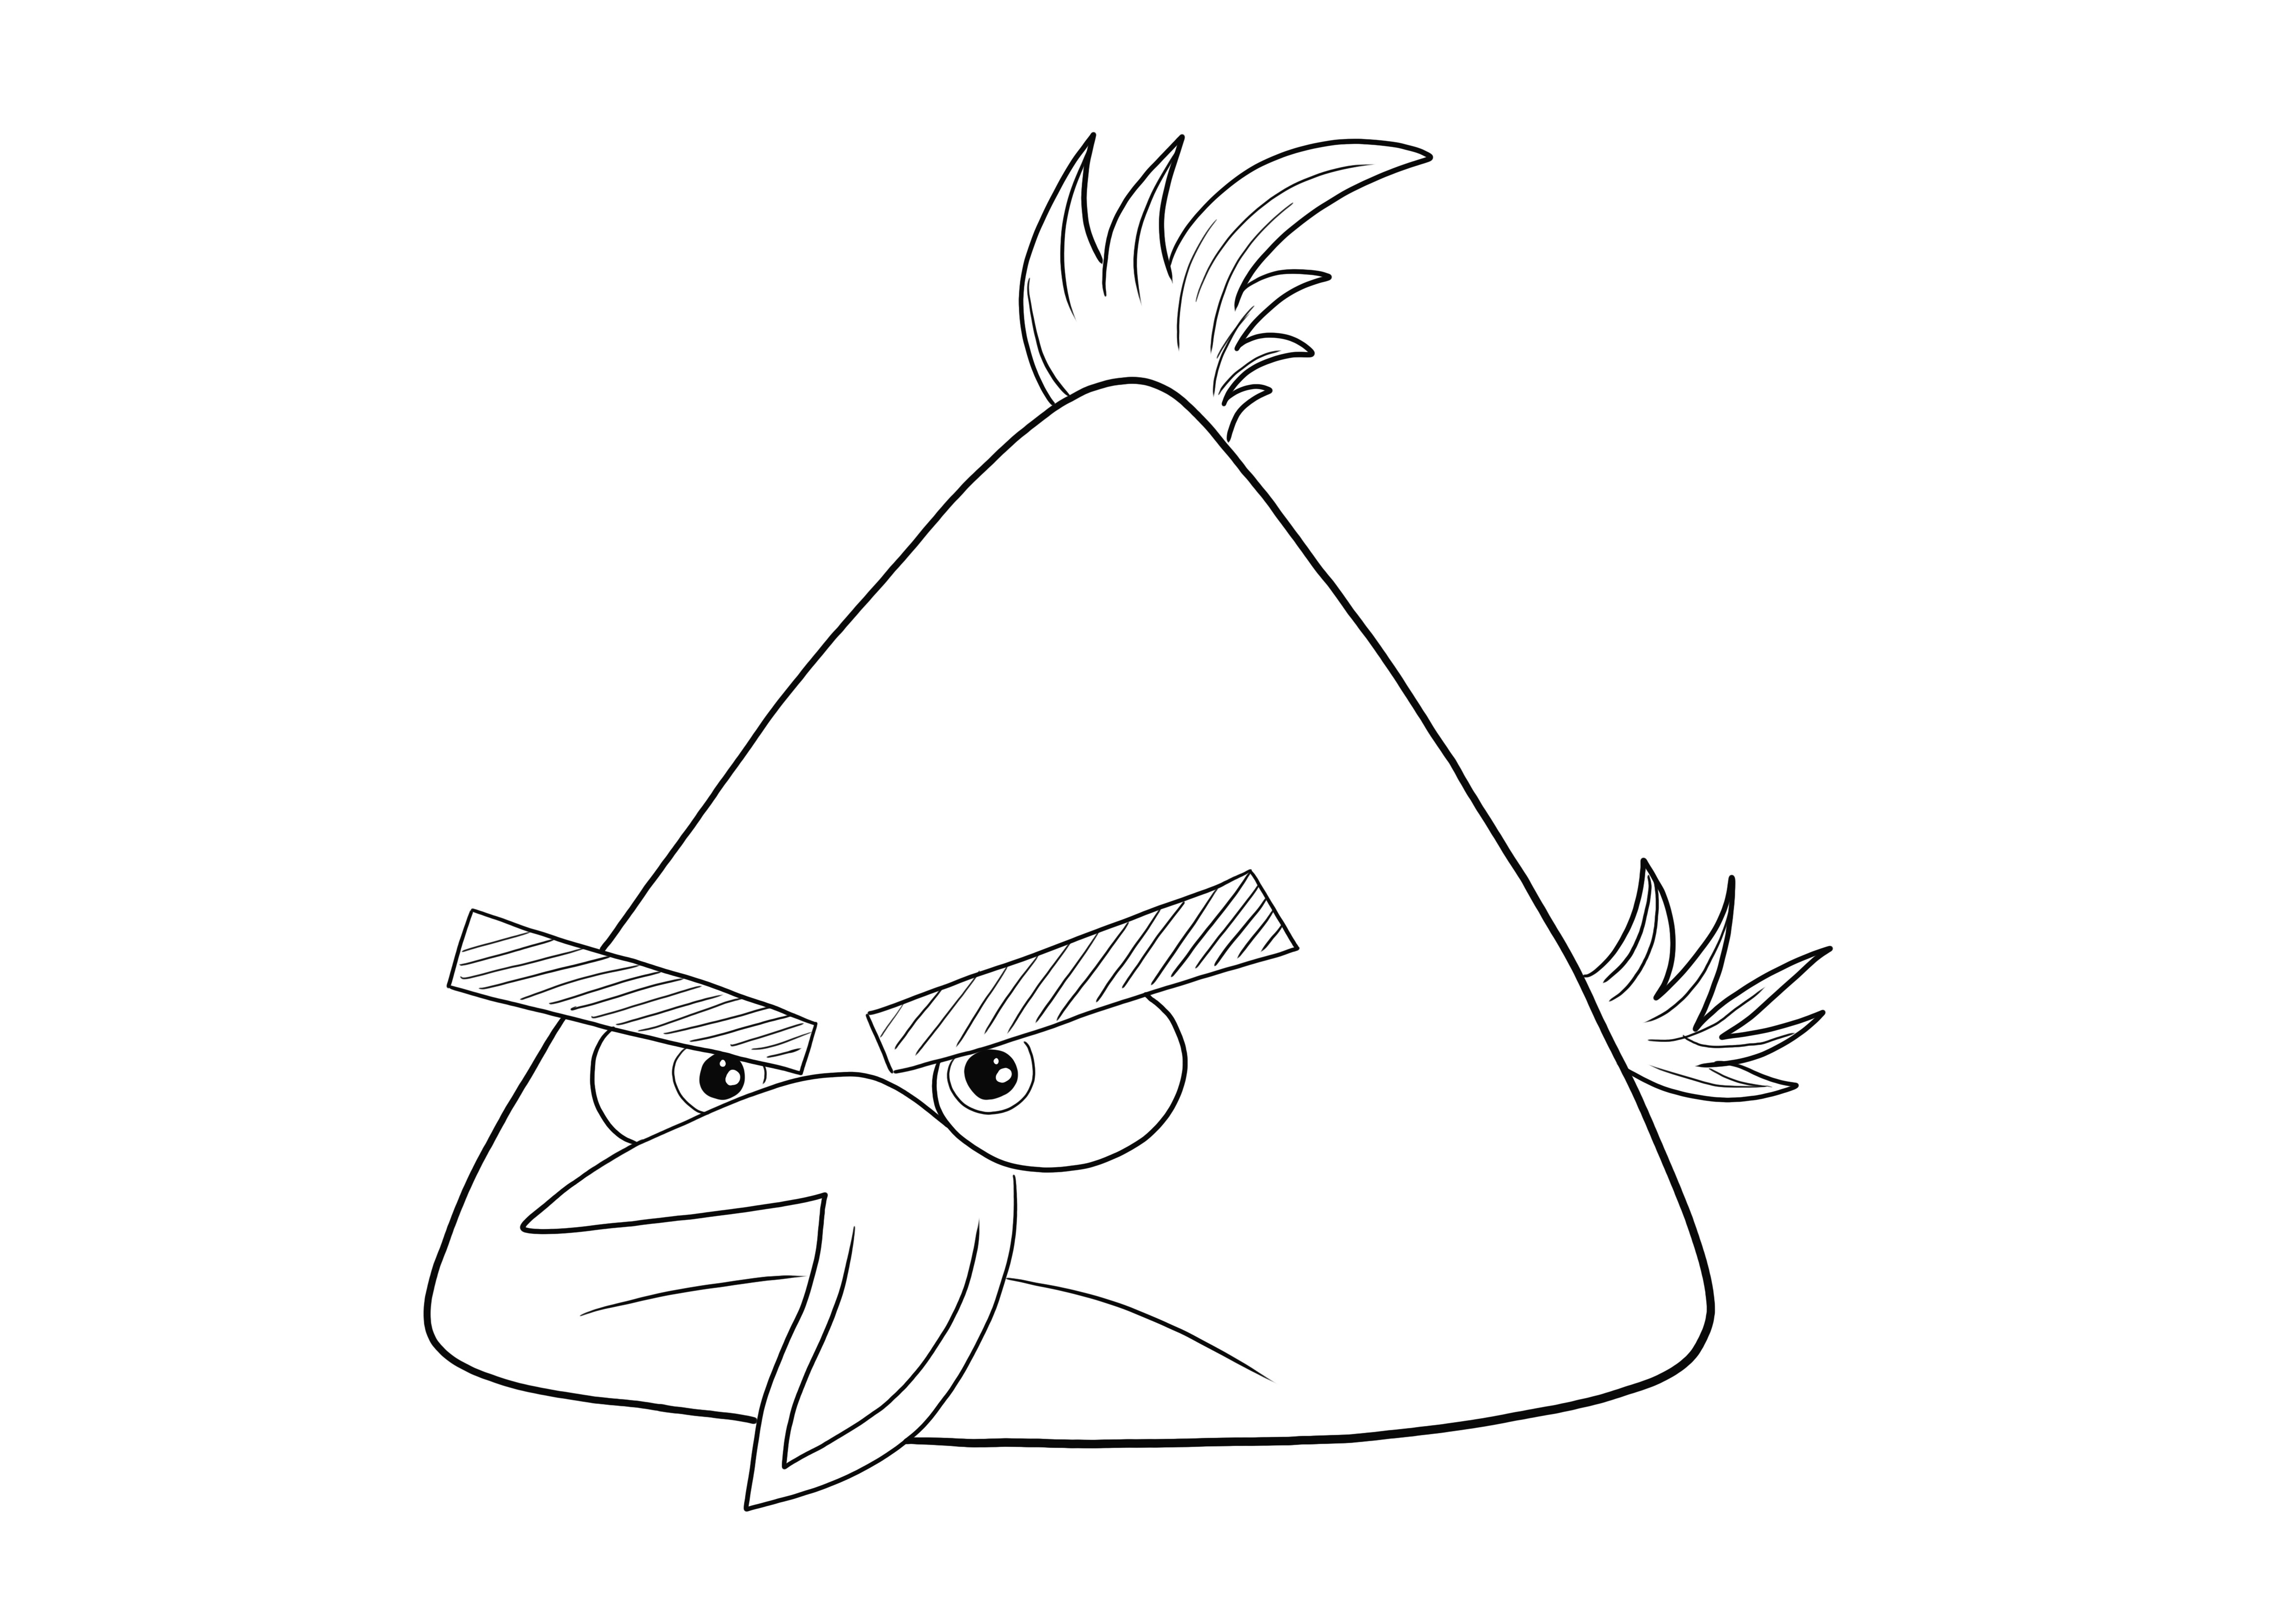 Chuck the Yellow Bird dari kartun Angry Birds gratis untuk mencetak dan mewarnai gambar